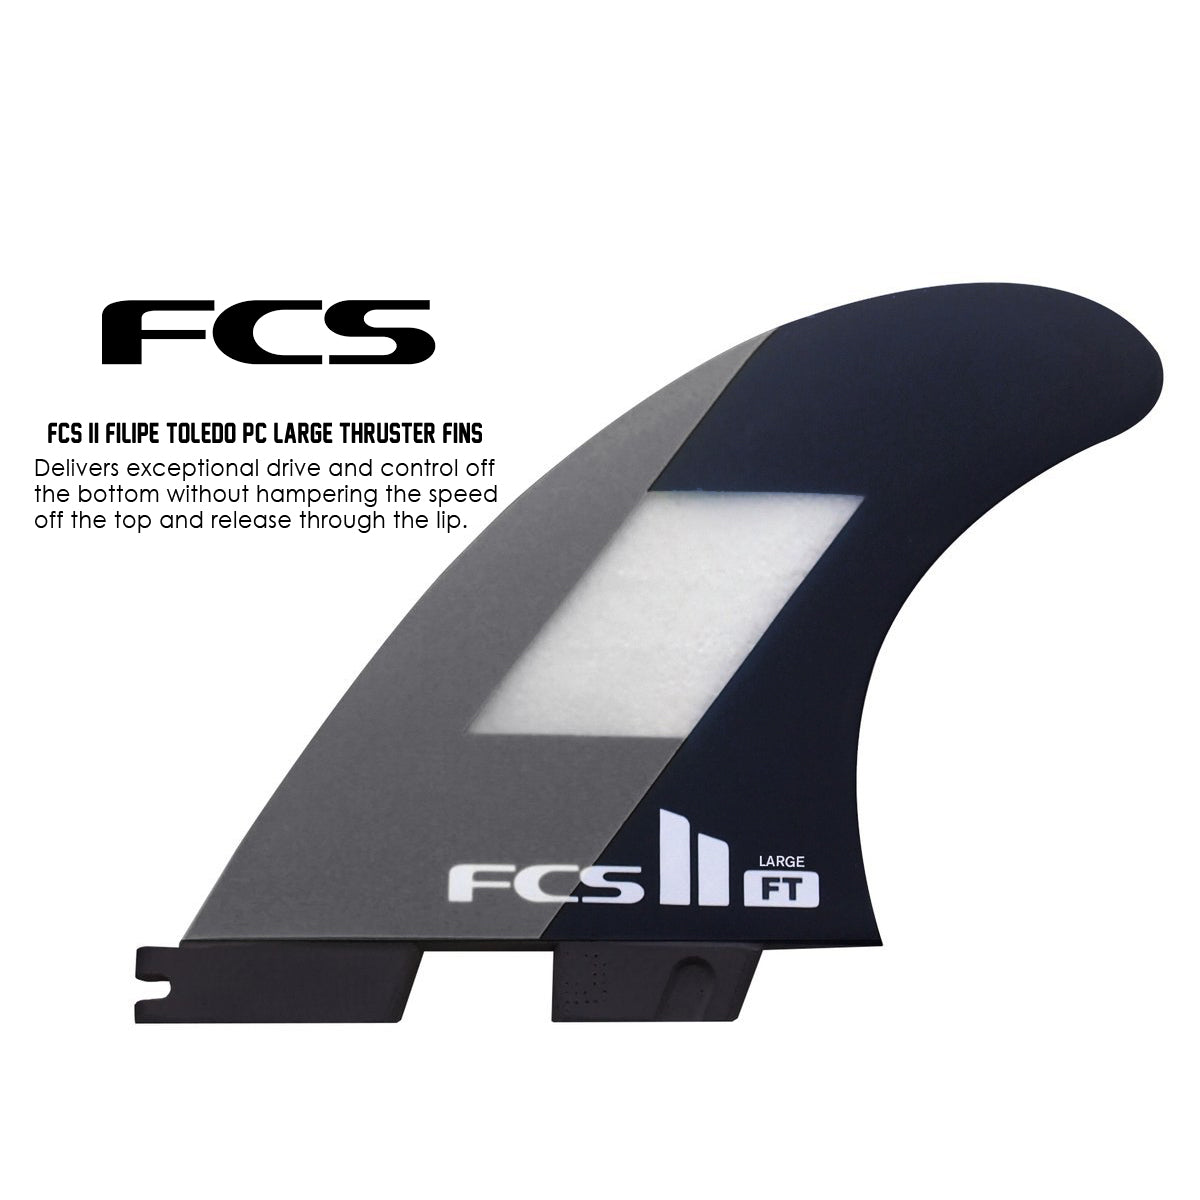 FCS II Filipe Toledo PC Large Thruster Fins Fins